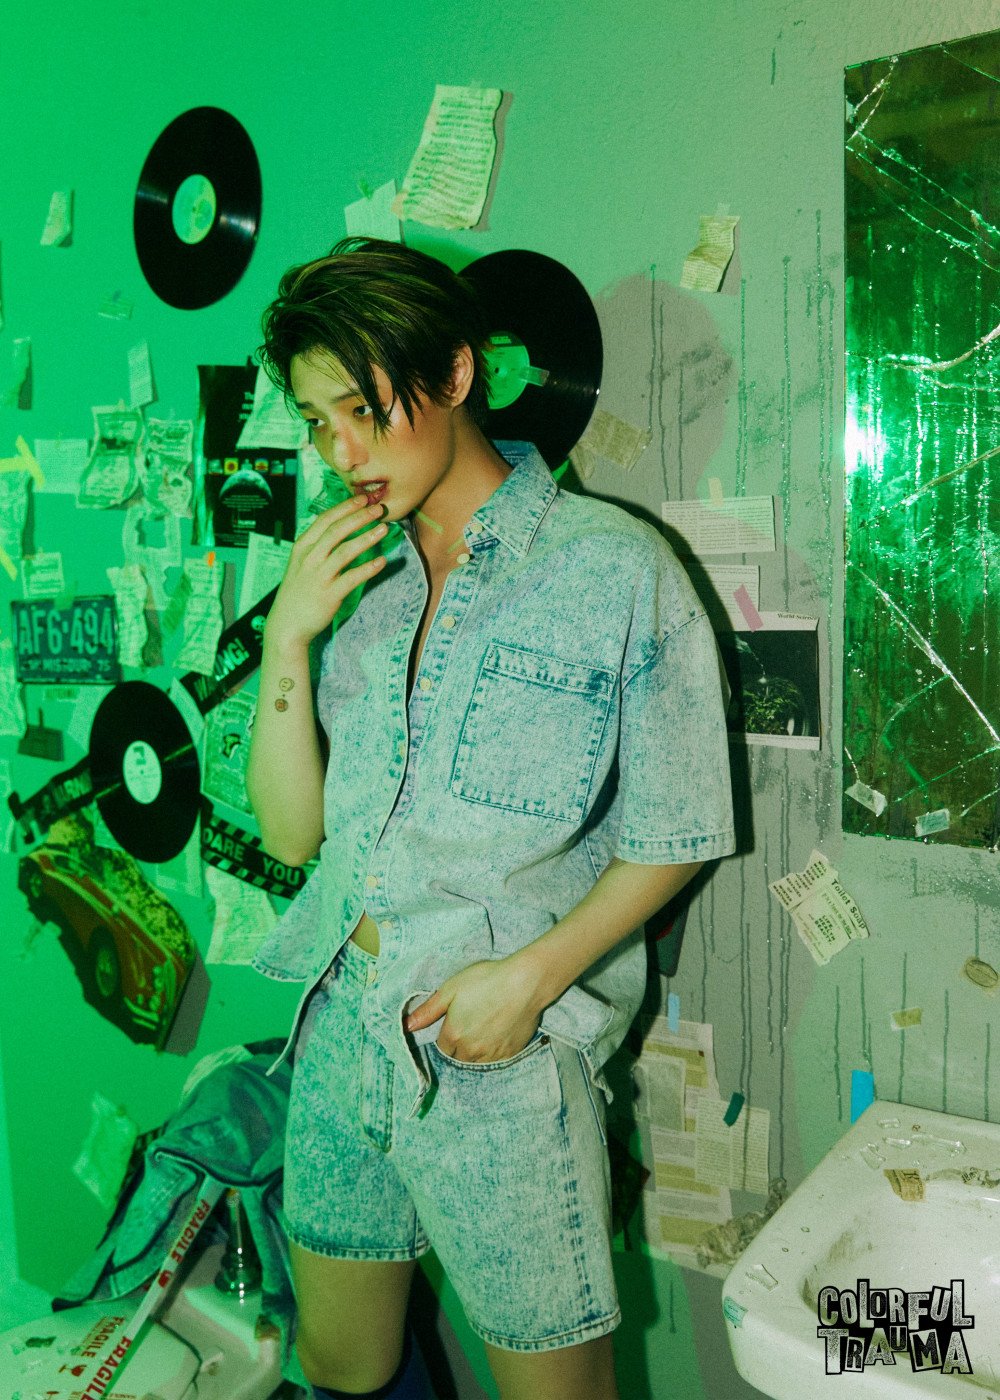 [Камбэк] WOODZ мини-альбом «Colorful Trauma»: музыкальный клип